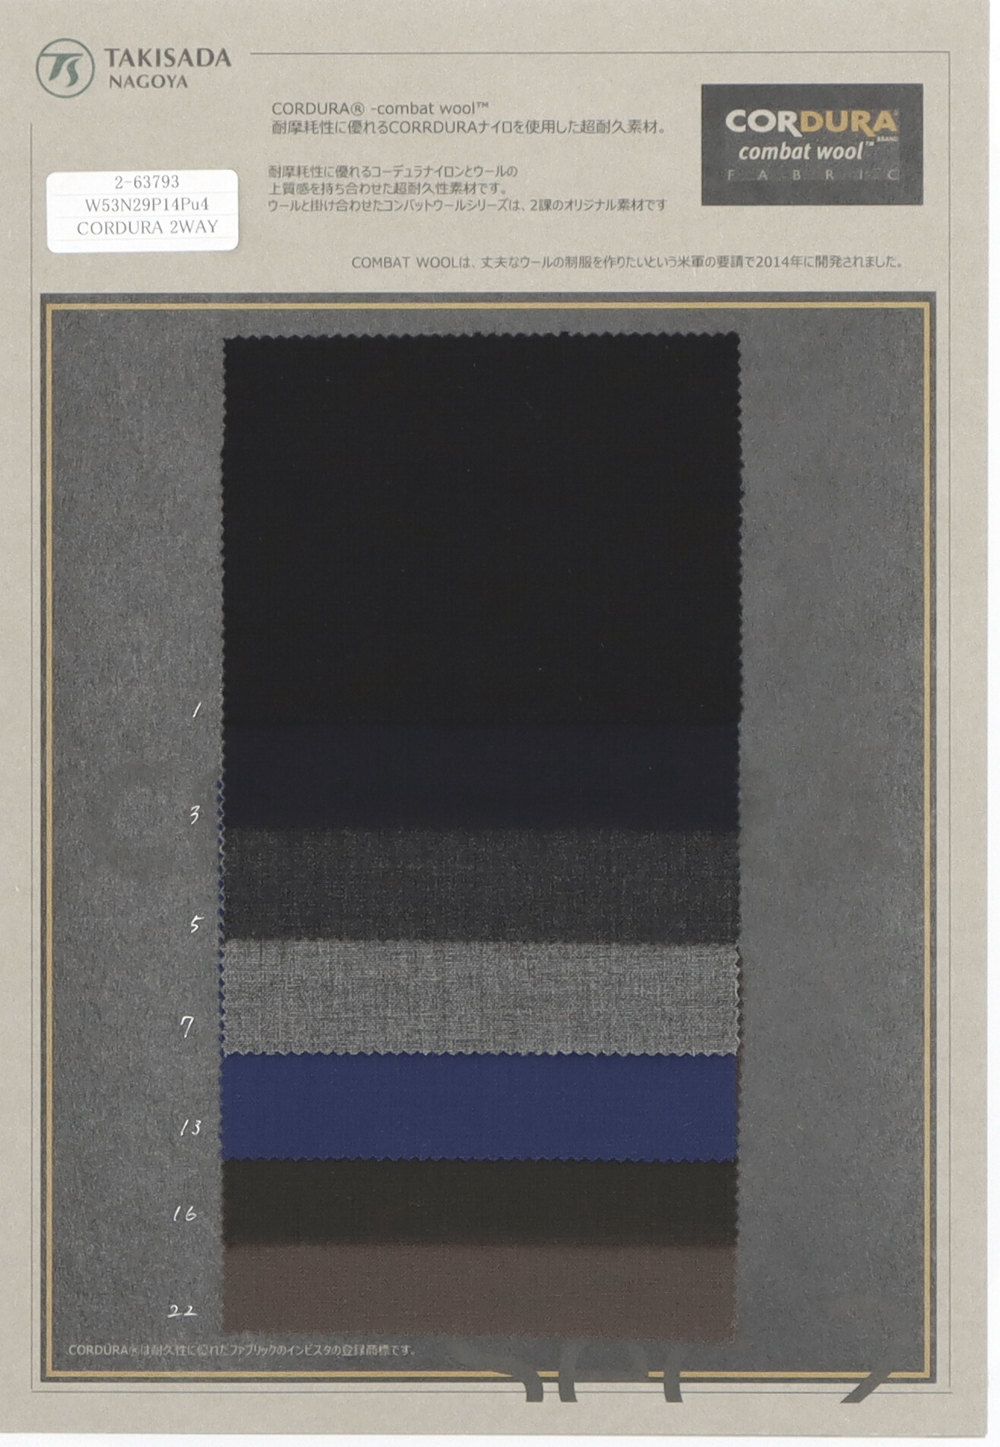 2-63793 CORDURA COMBATWOOL 2WAY Stretch Tropical[Textile / Fabric] Takisada Nagoya